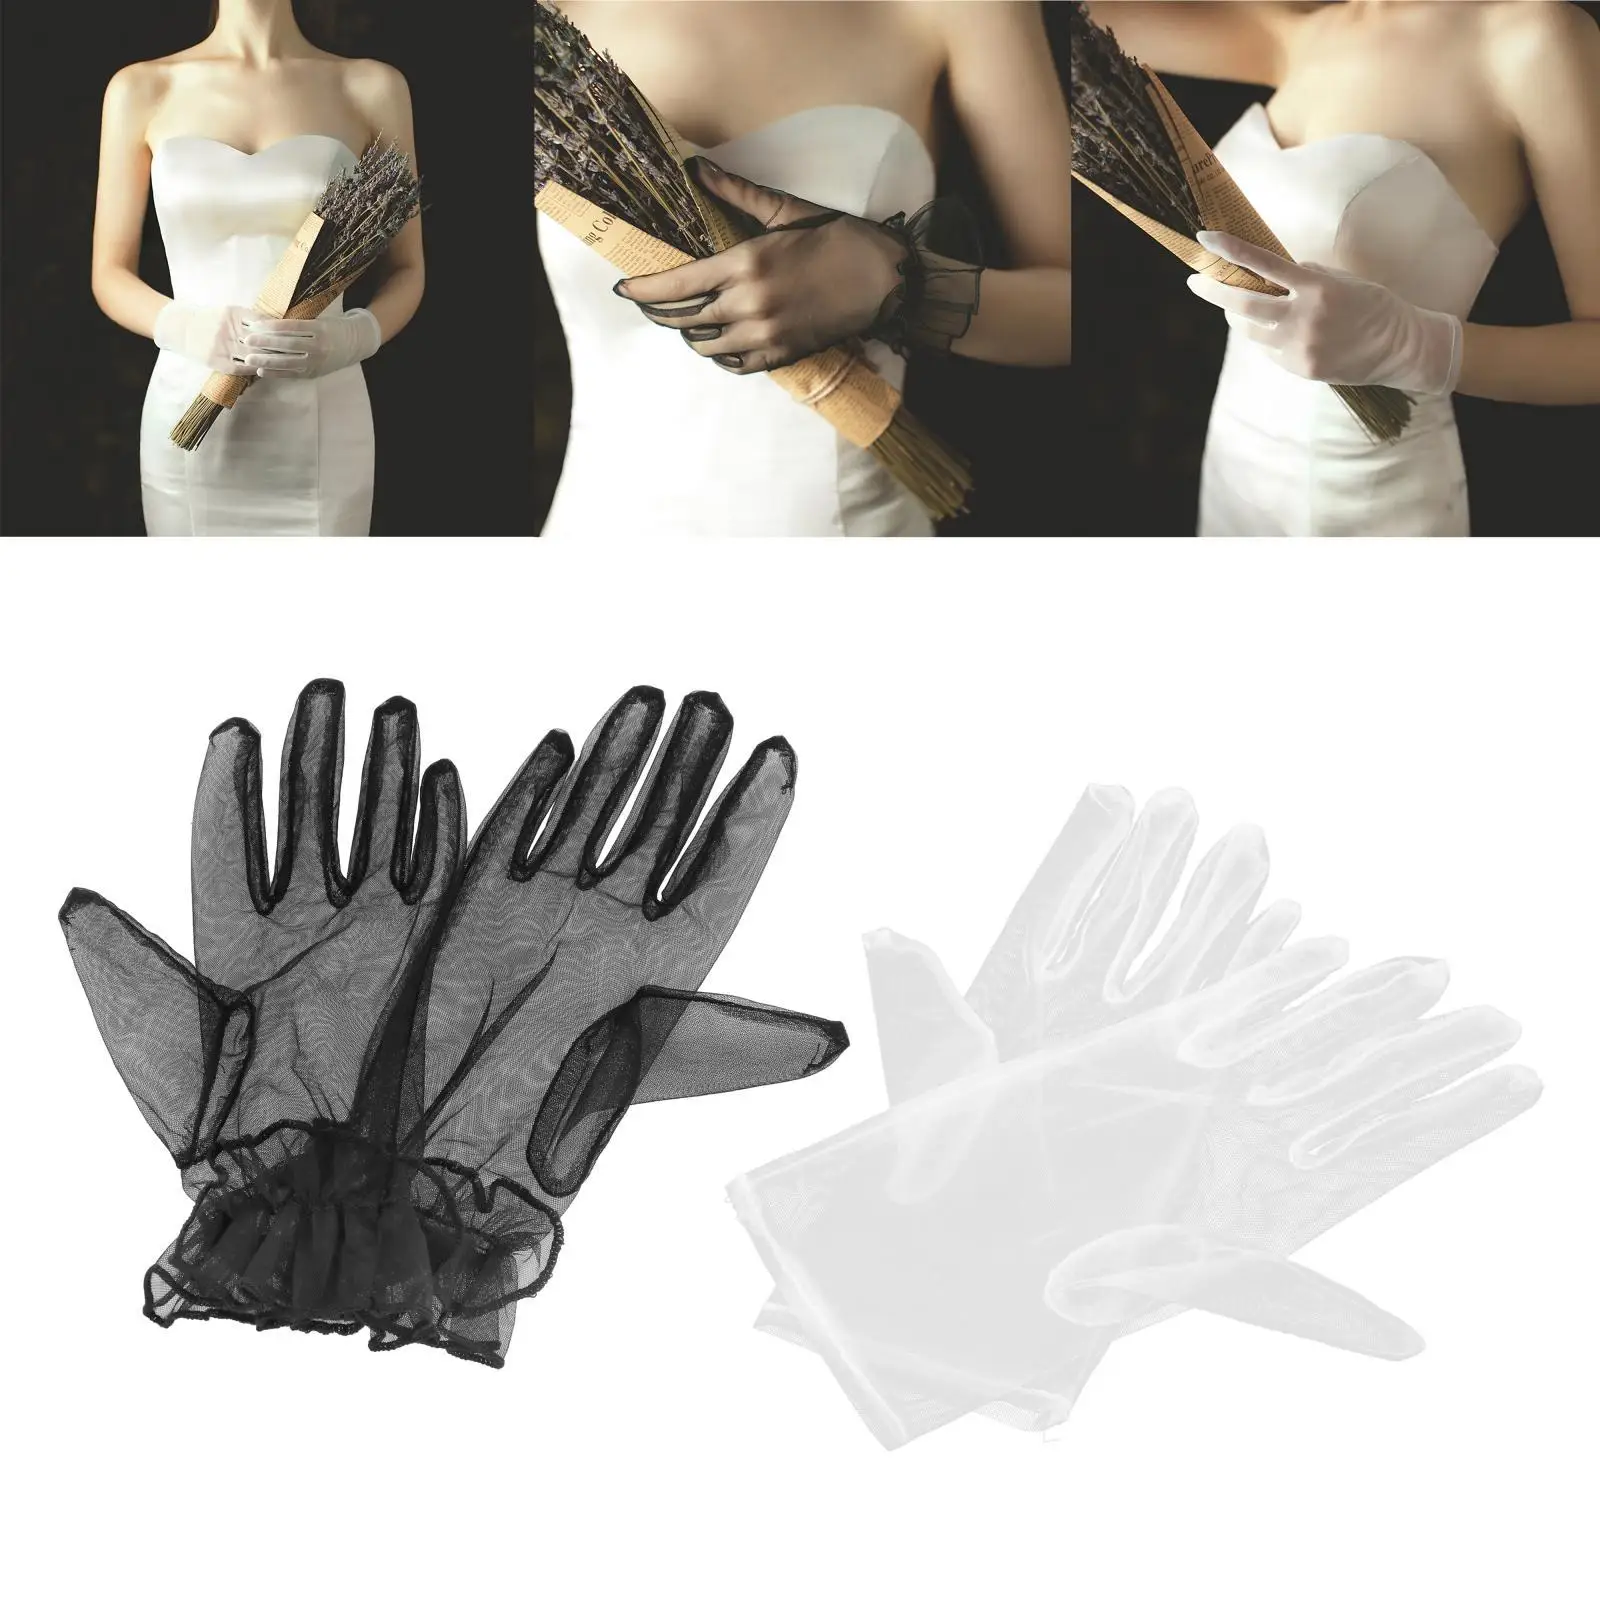 Fashion Bride Wedding Gloves Thin Wrist Length Prom Costume Accessories